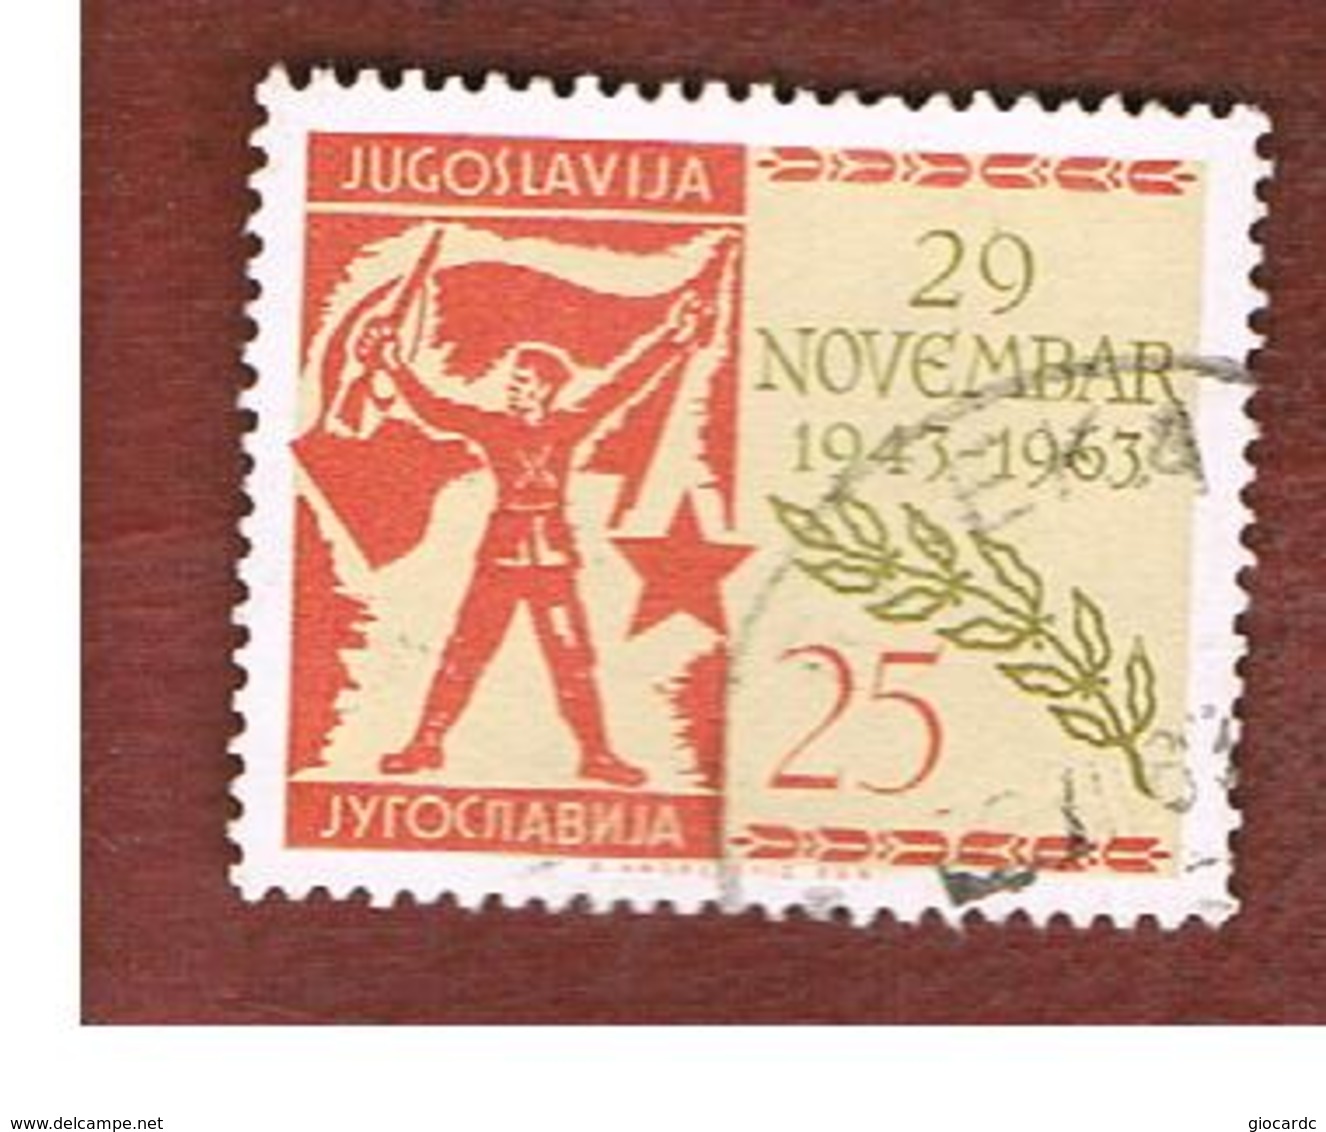 JUGOSLAVIA (YUGOSLAVIA)   - SG 1097   -    1963 20^ ANNIVERSARY OF YUGOSLAV DEMOCRATIC FEDERATION  -   USED - Gebruikt